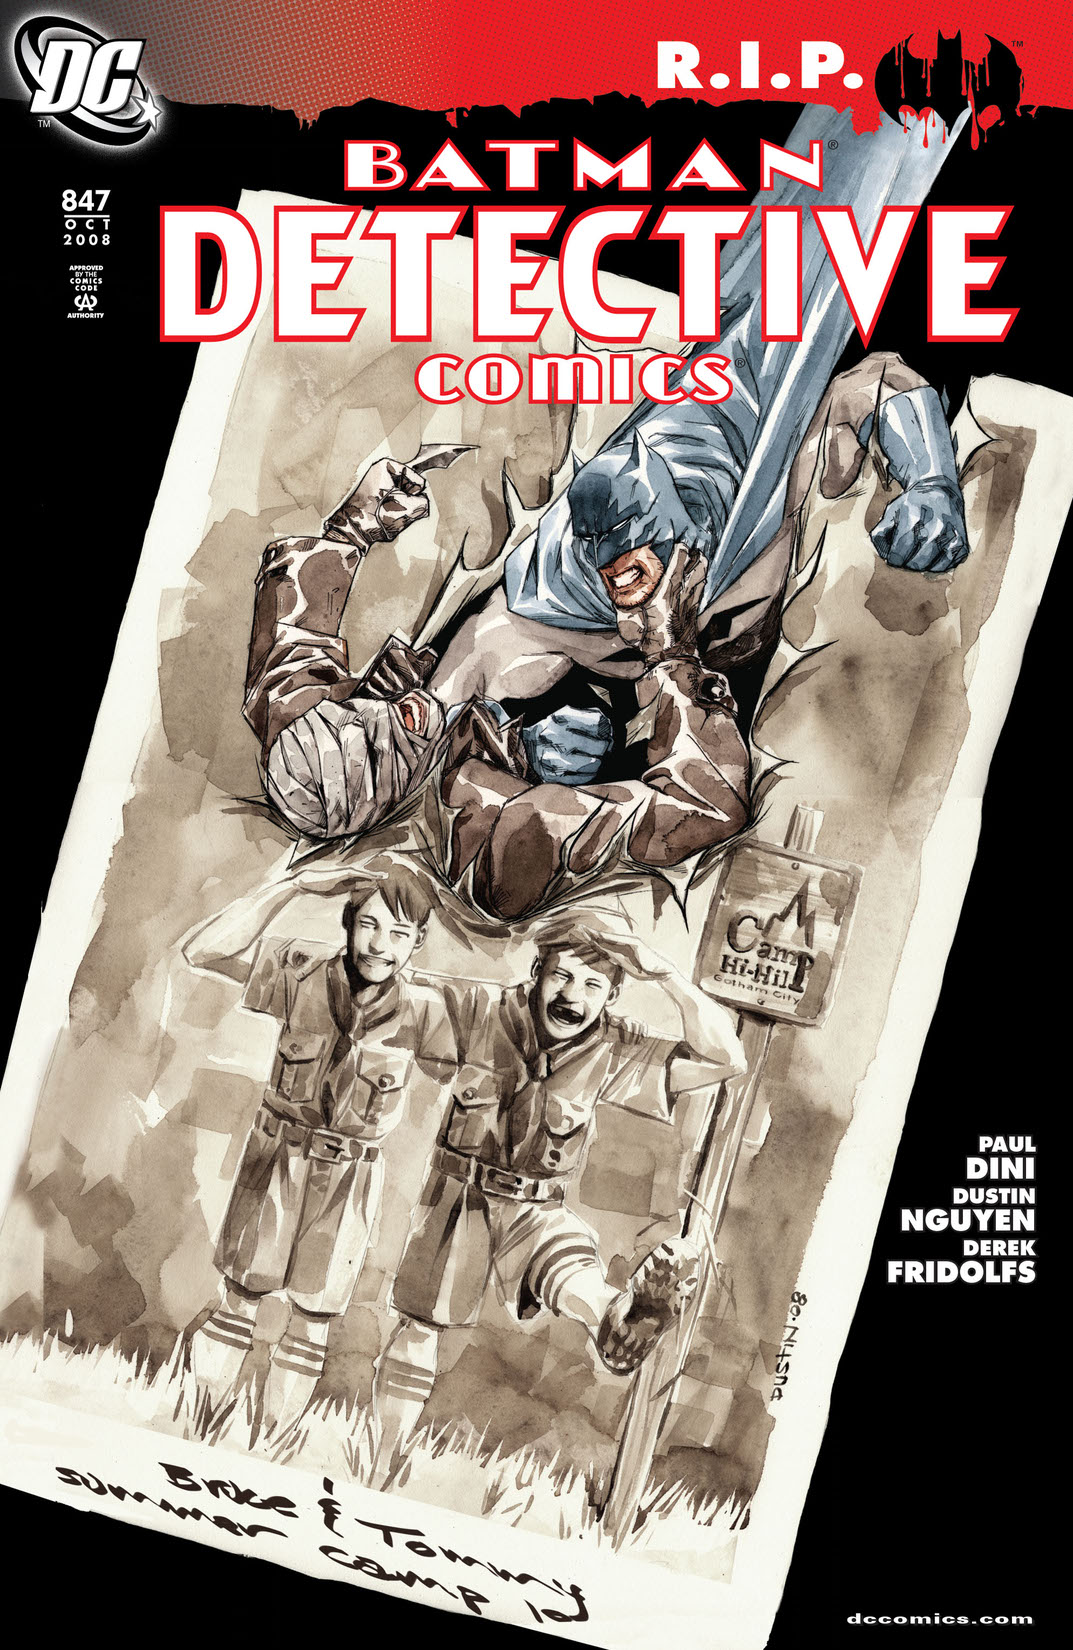 Detective Comics (1937-) #847 preview images